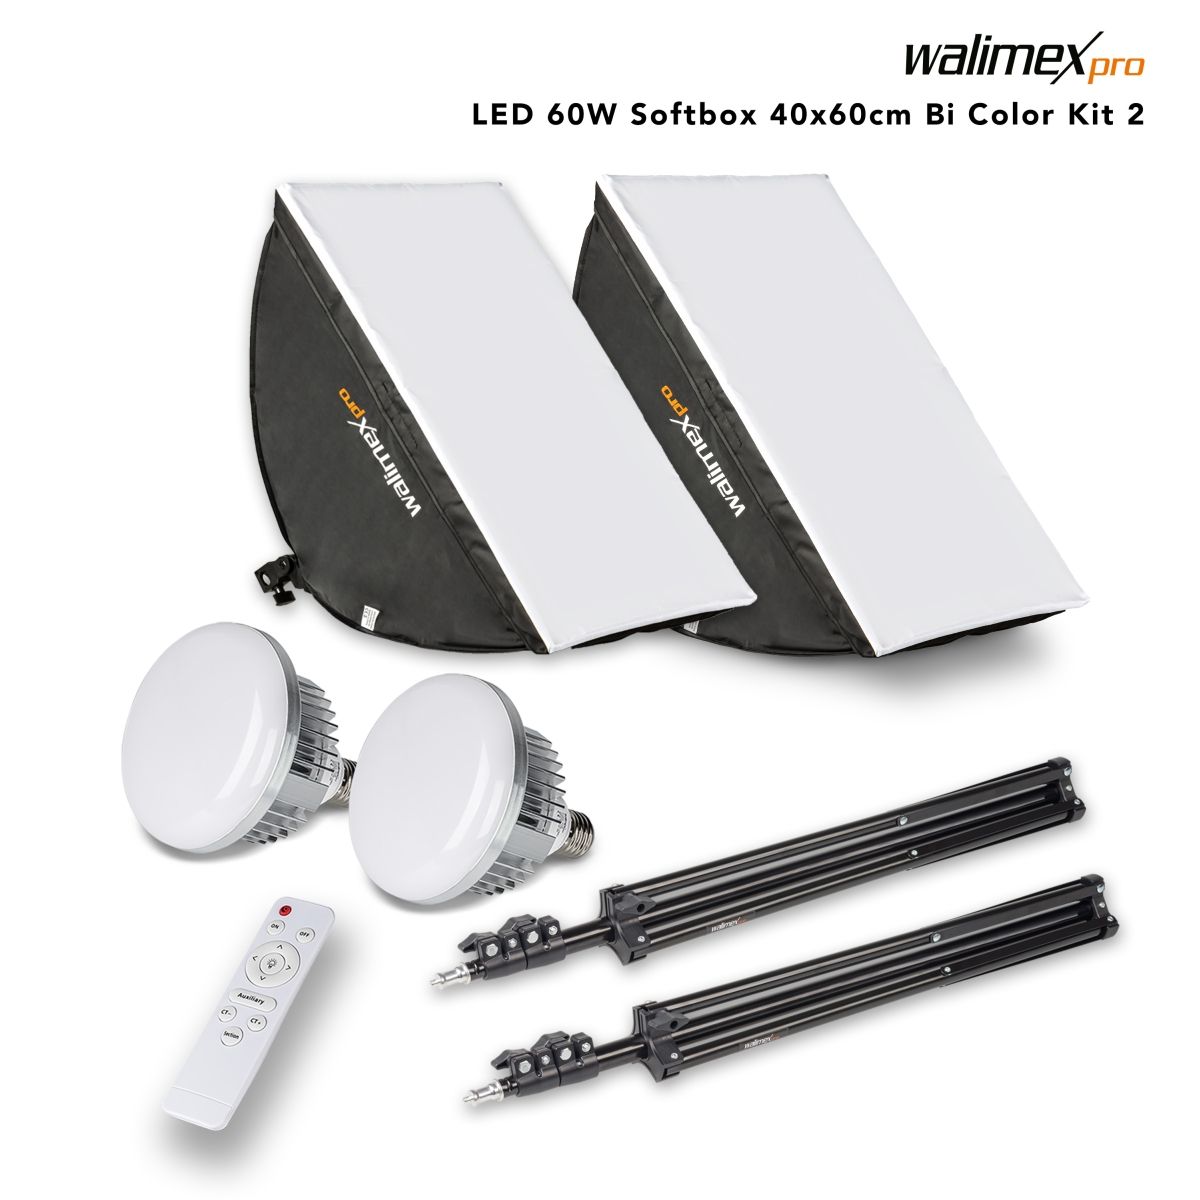 Walimex pro LED 60W Softbox 40 x 60 cm Bi Color Kit 2